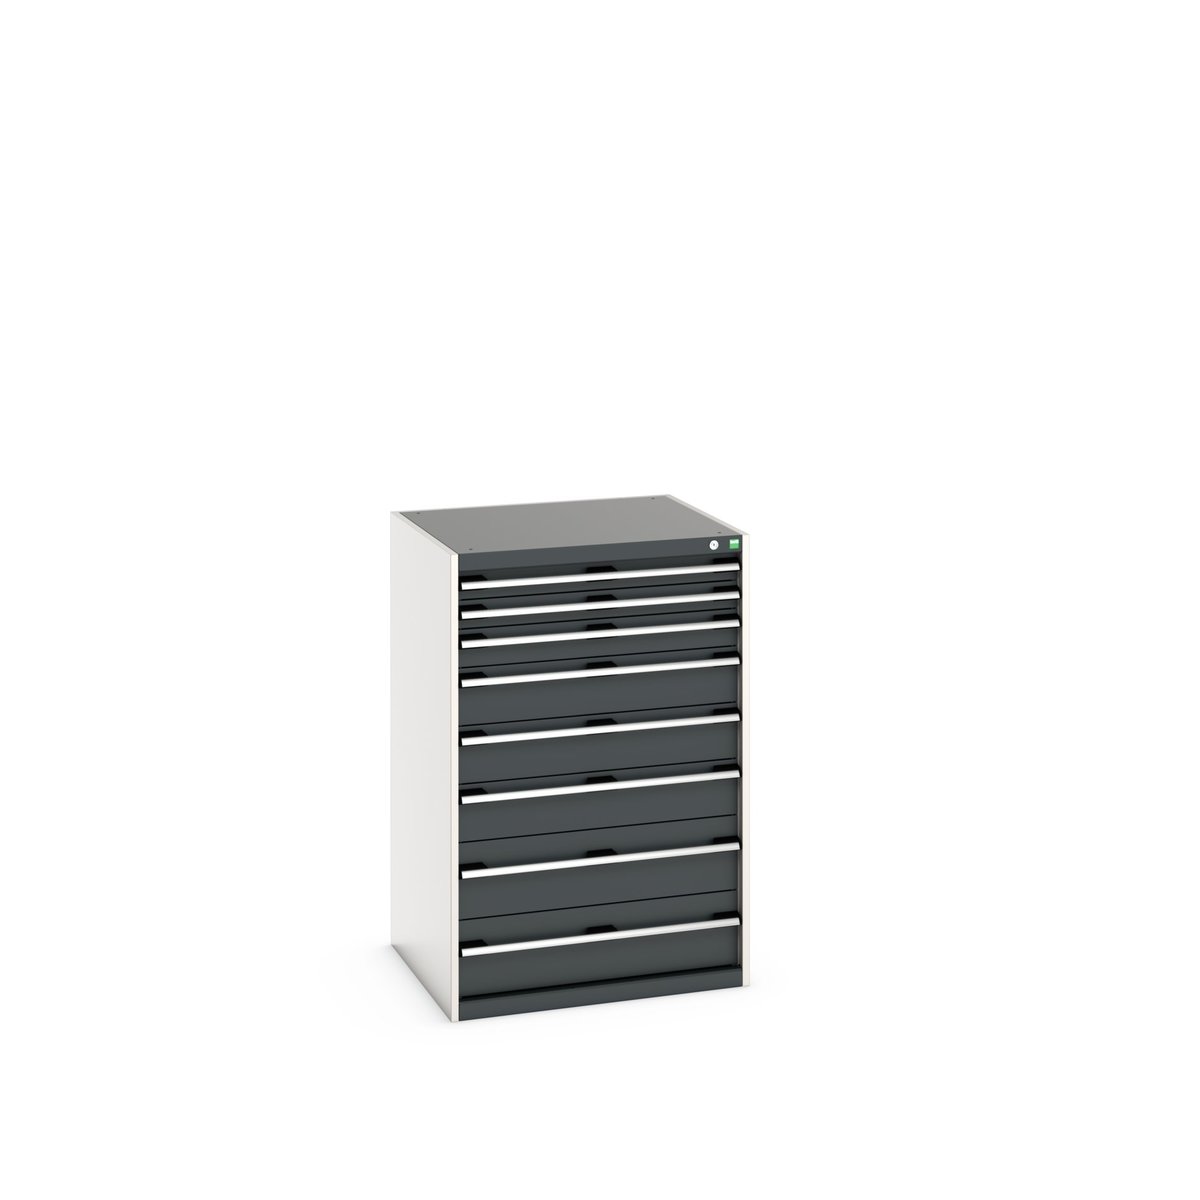 40028033. - cubio drawer cabinet 